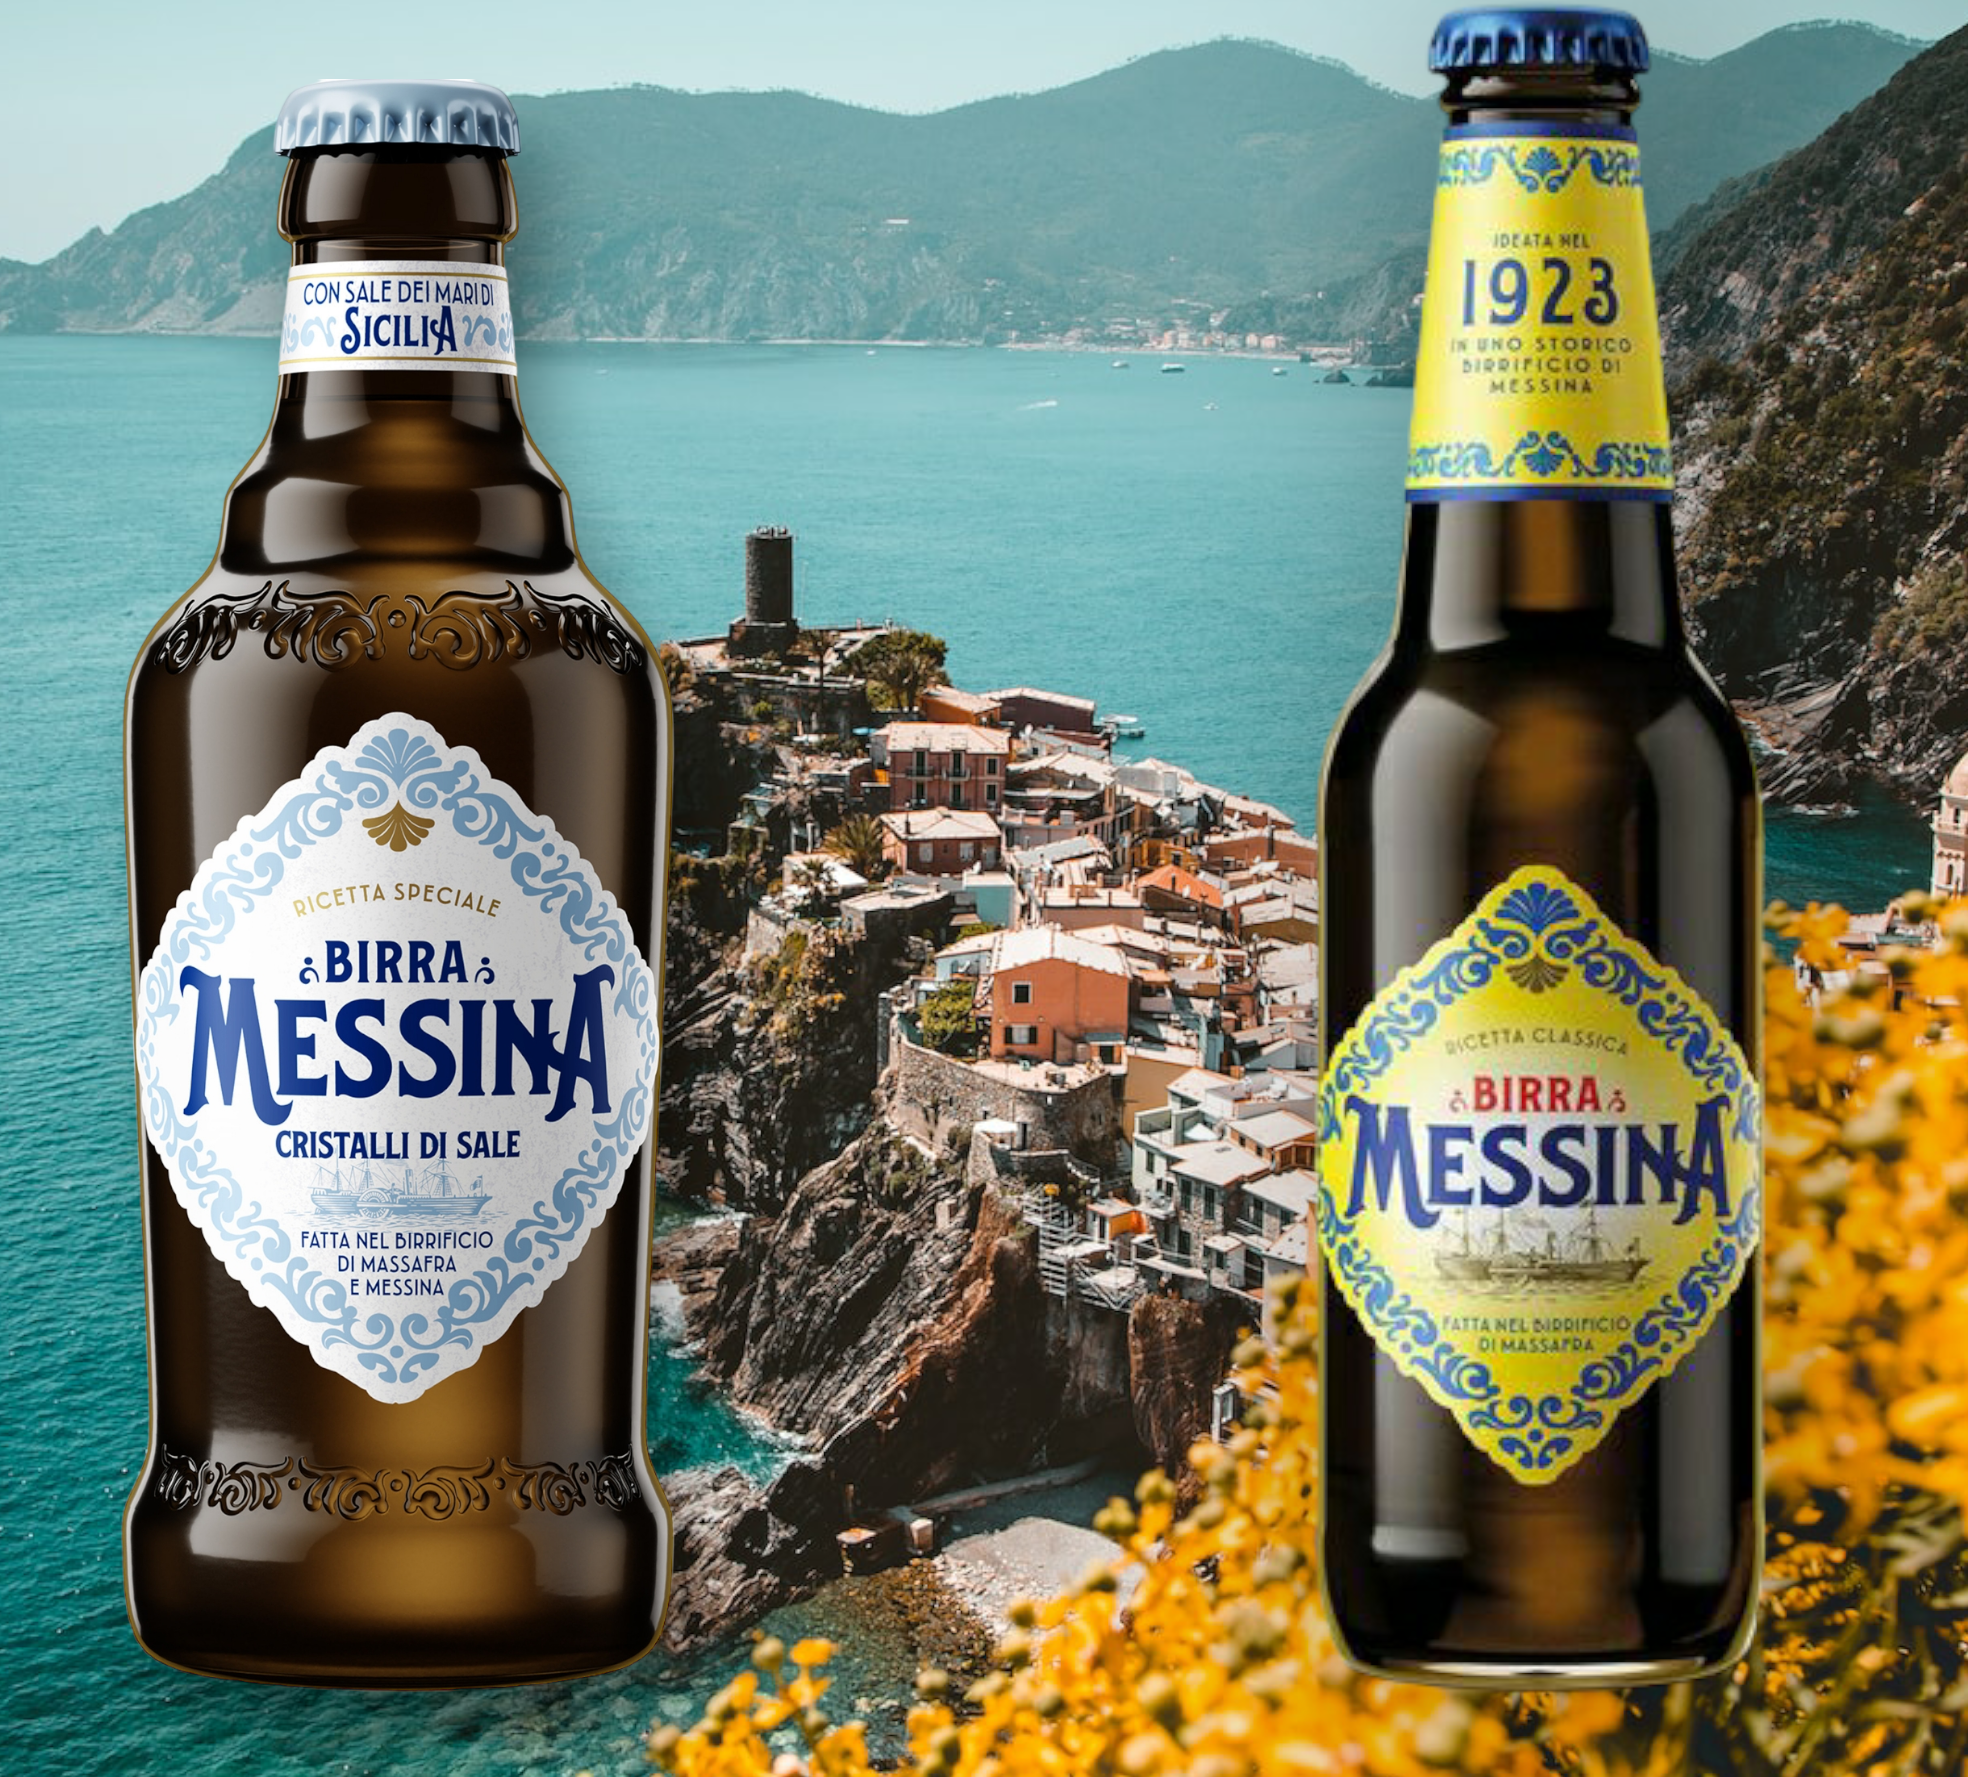 Italienisches Bier im Mix - Messina Cristalli di Sale und Birra Messina Classic